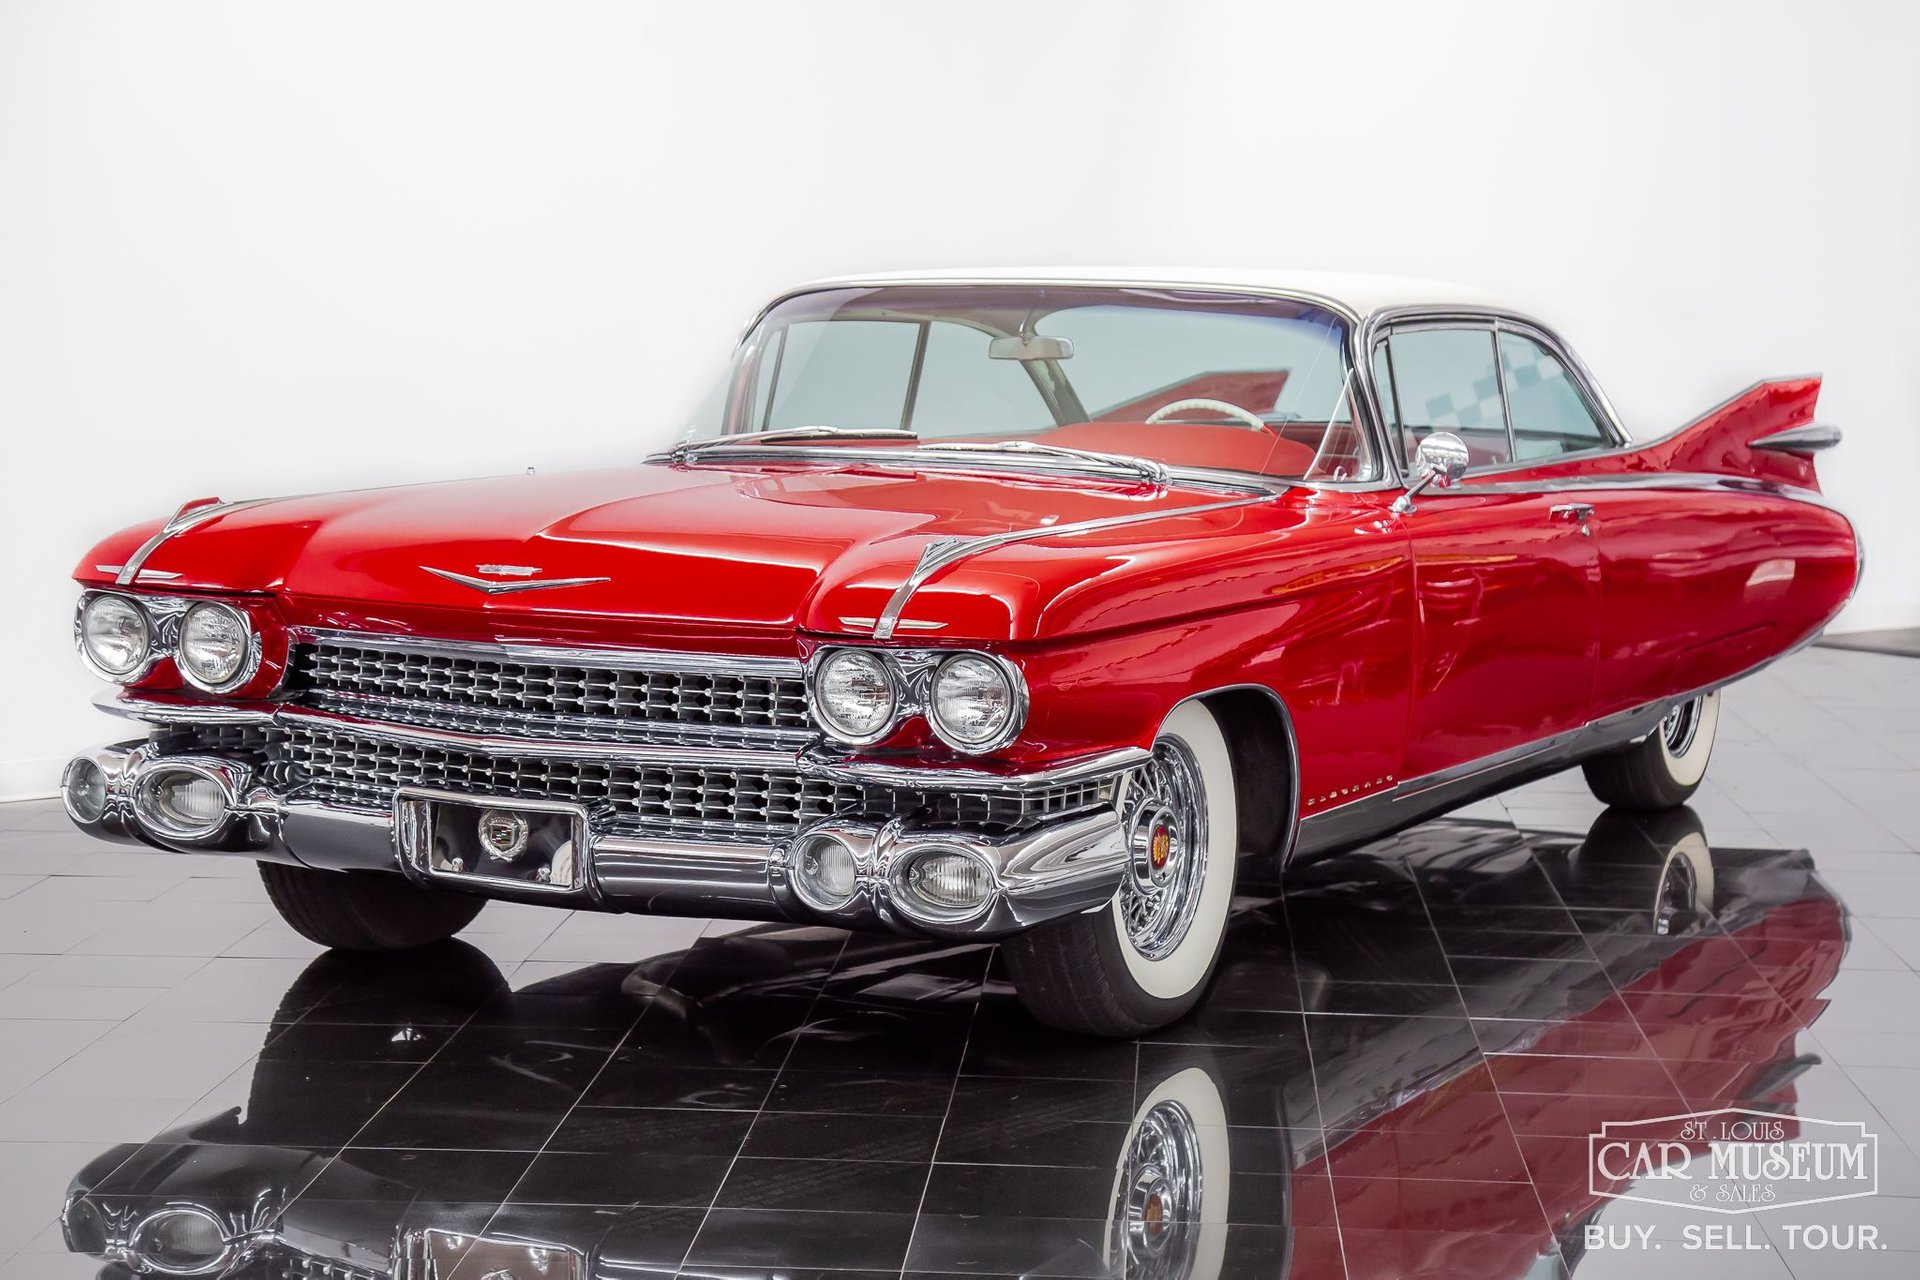 1959 Cadillac Eldorado For Sale | St. Louis Car Museum